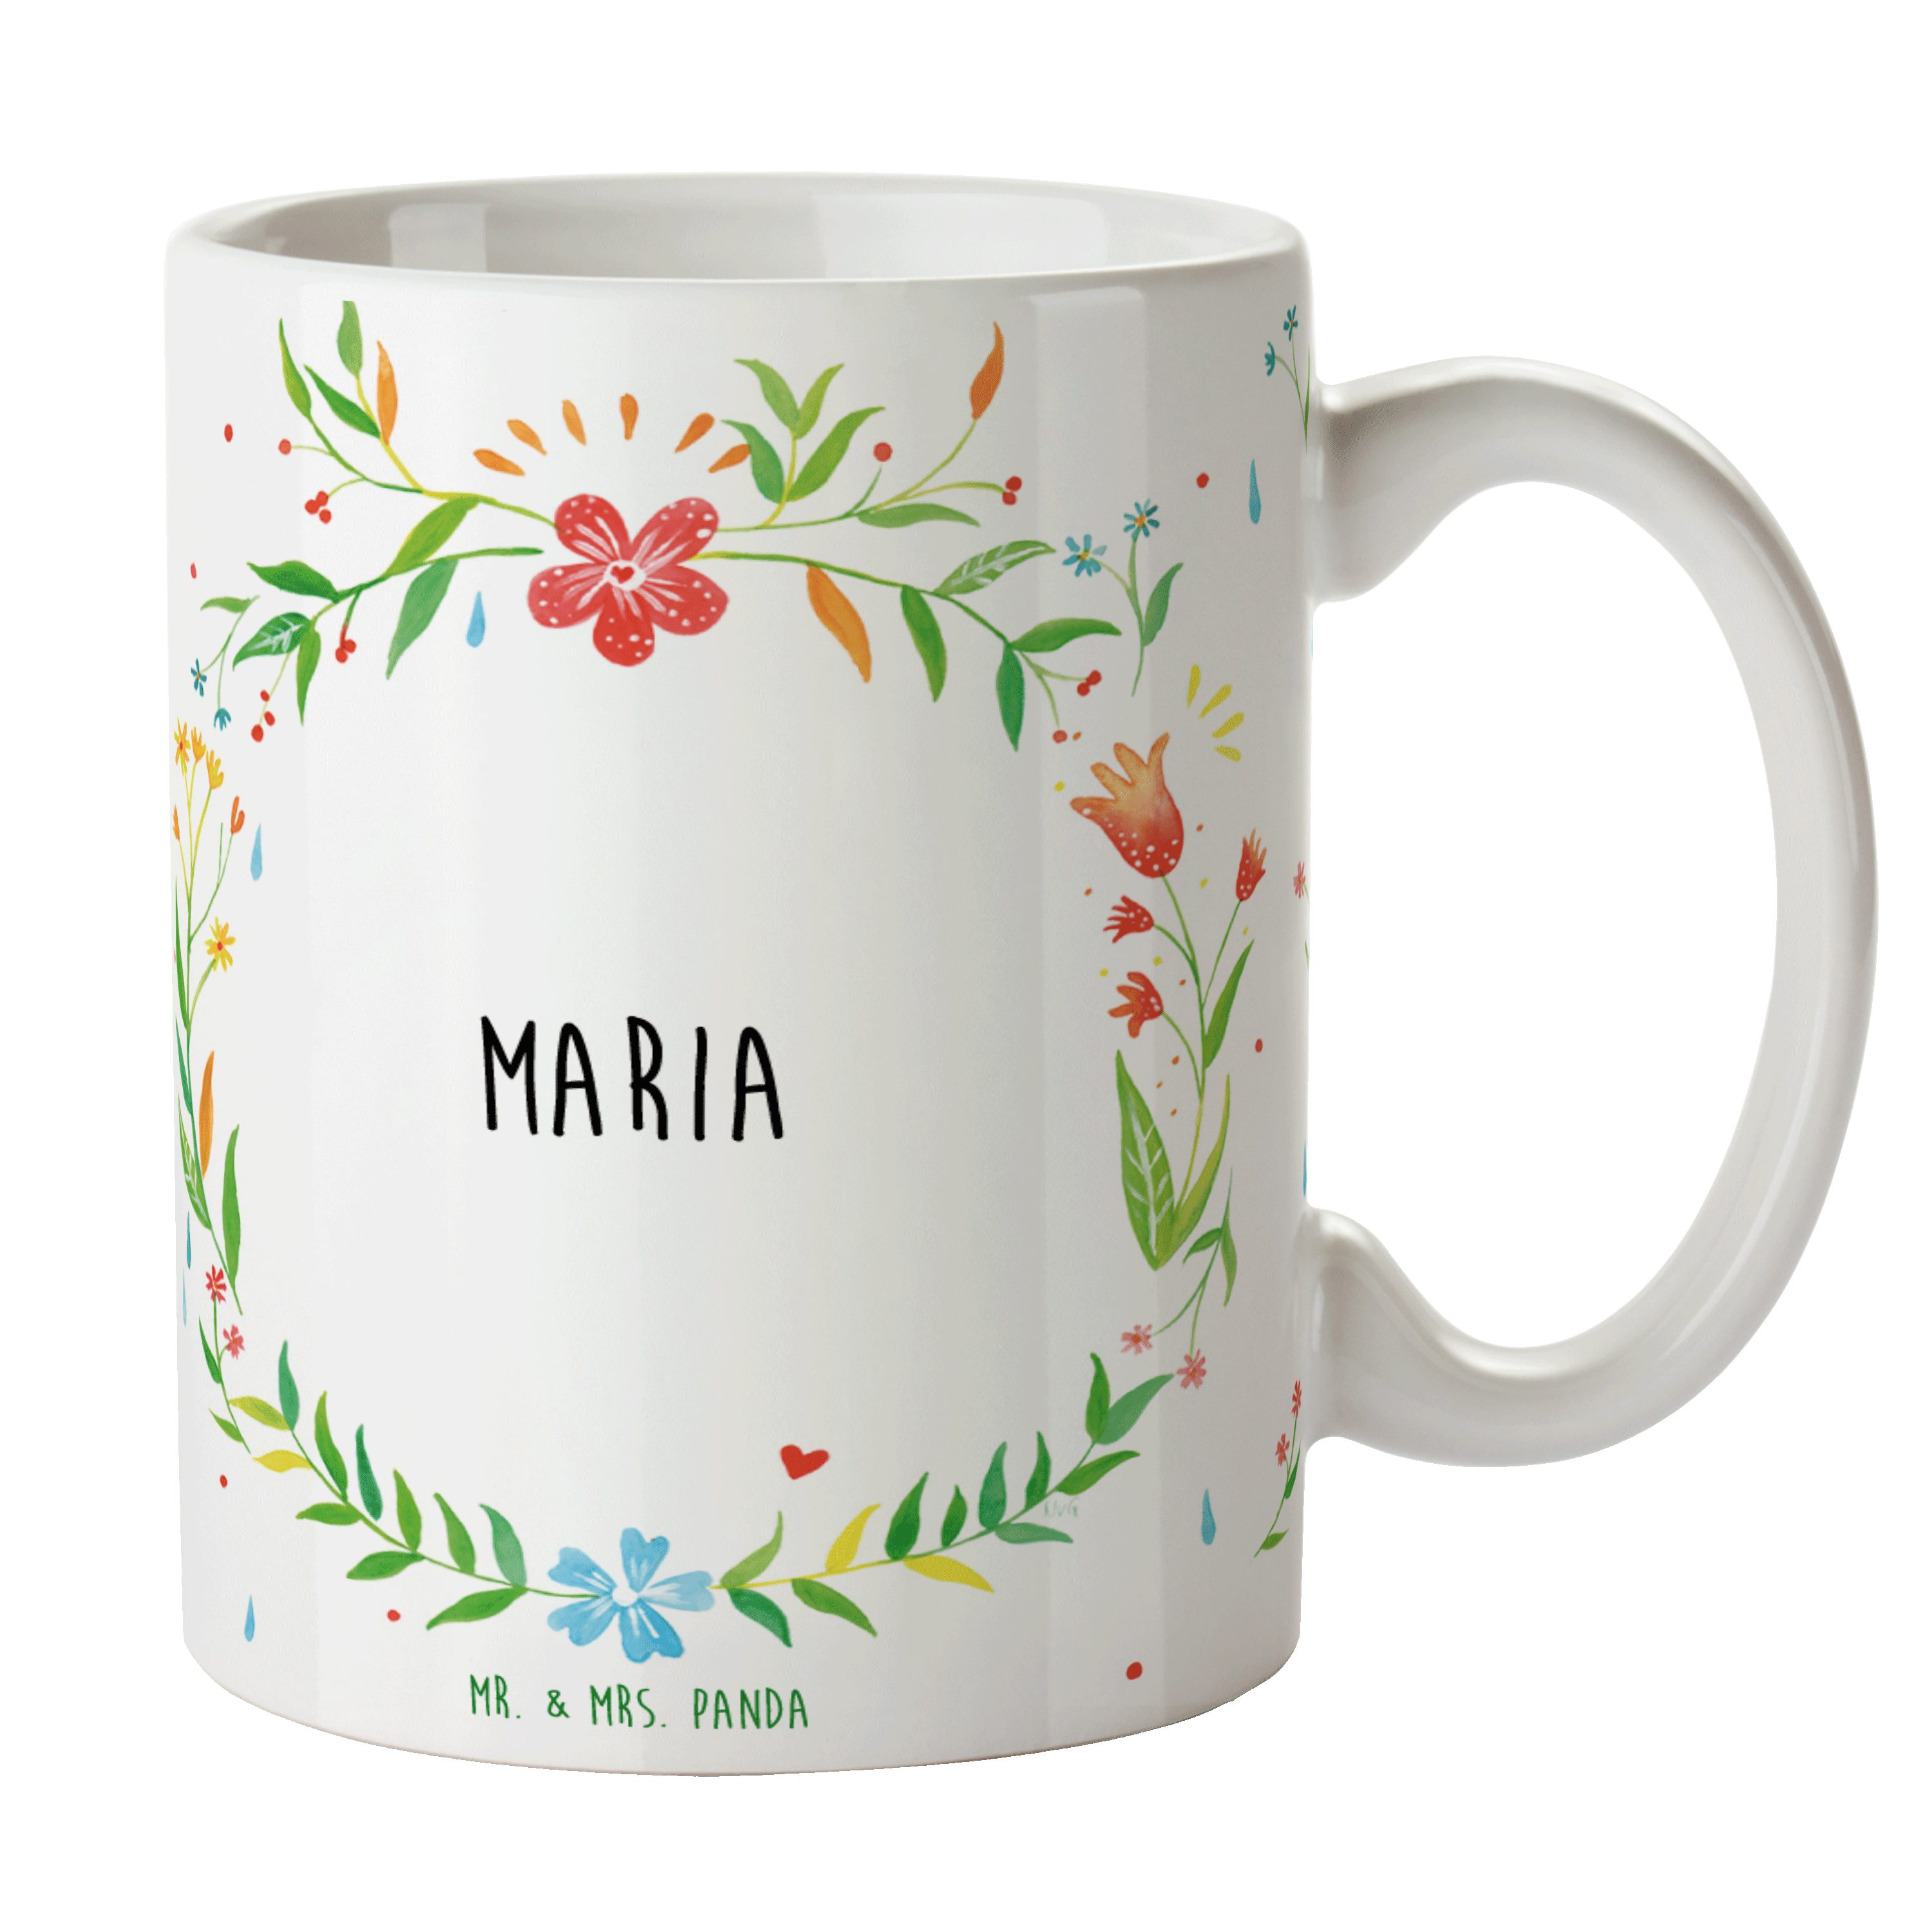 Mr. & Mrs. Panda Tasse Maria - Geschenk, Tasse, Büro Tasse, Tasse Motive, Geschenk Tasse, Ka, Keramik